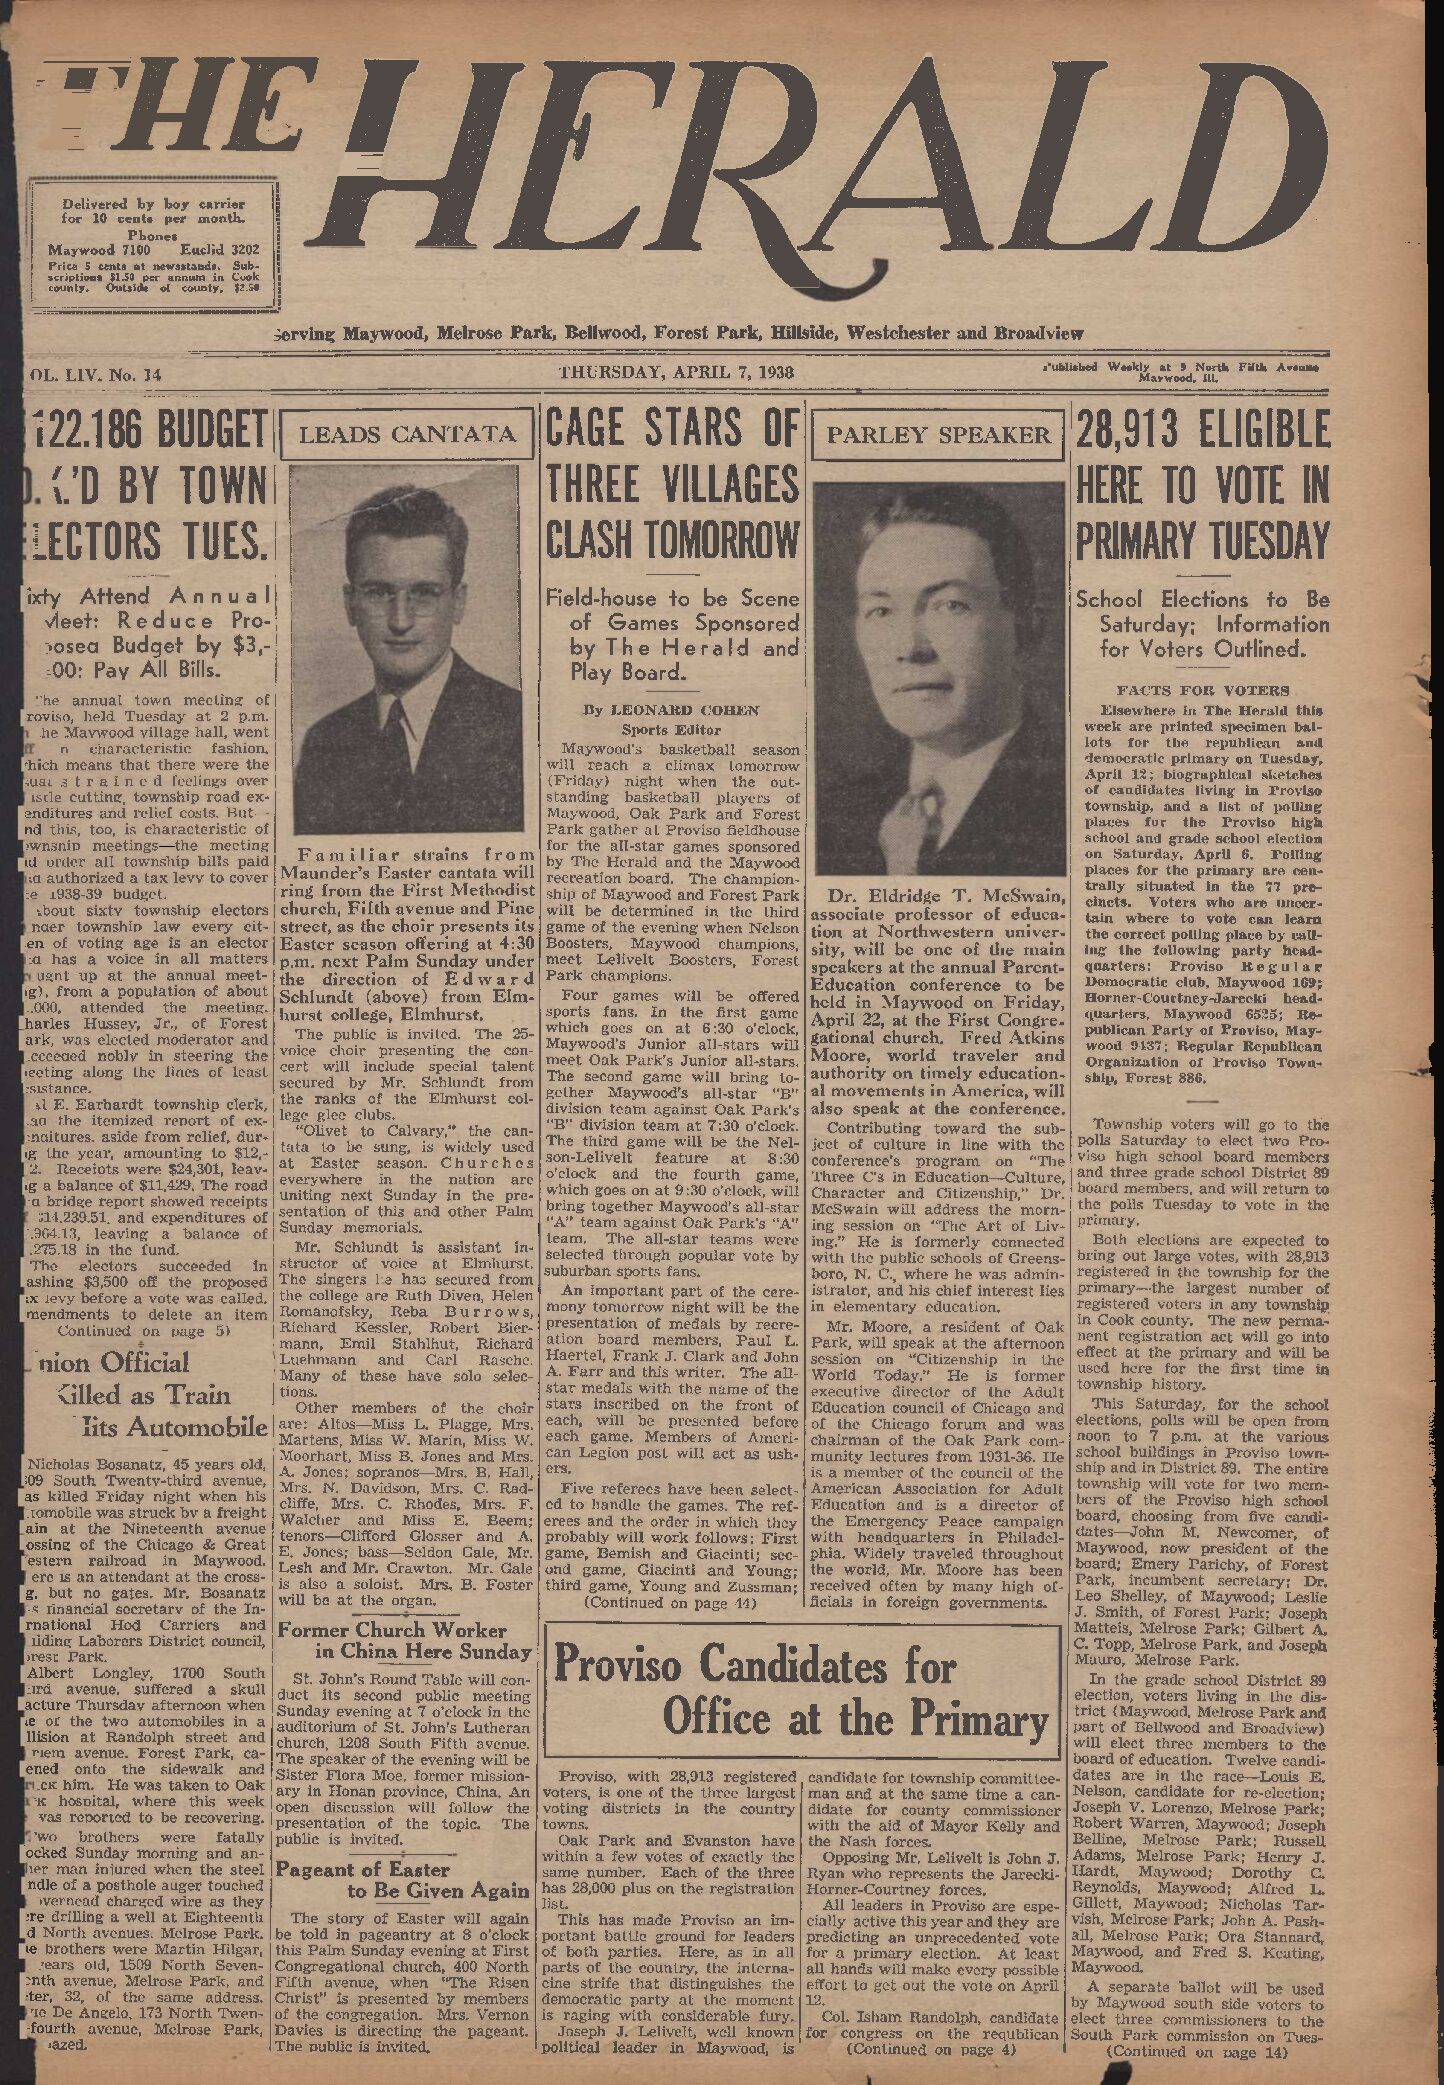 The Herald – 19380407